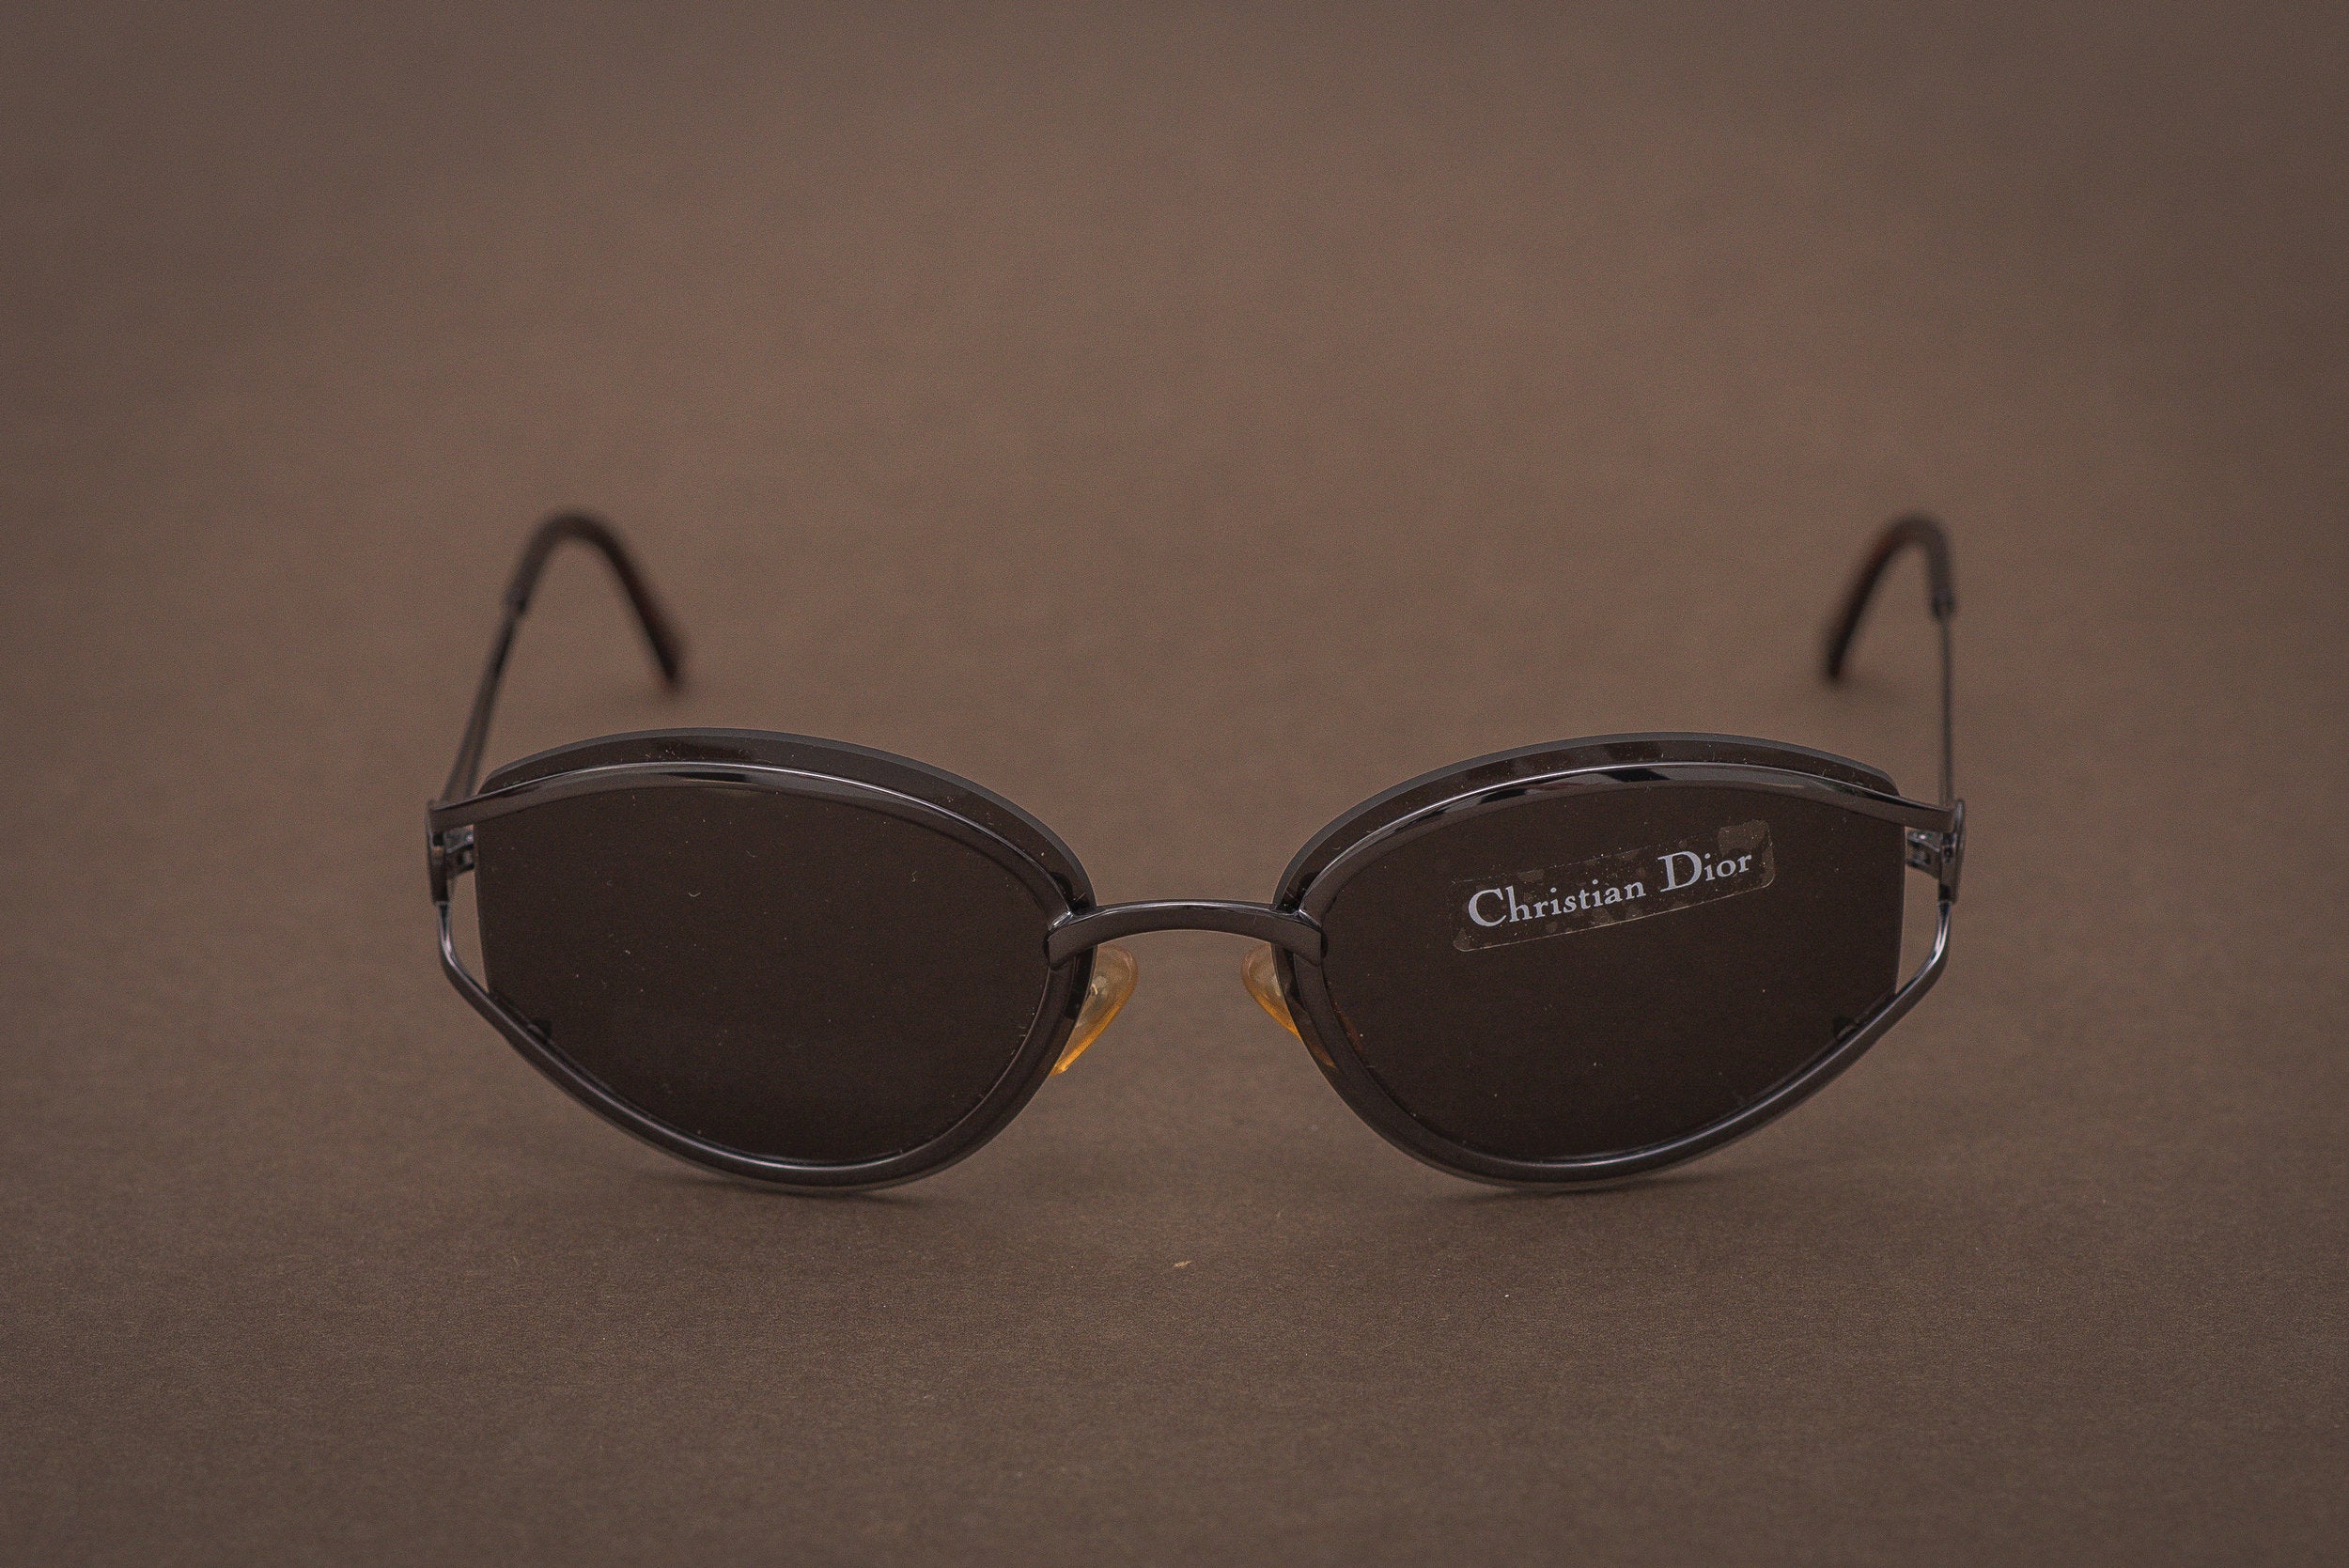 Dior sunglasses